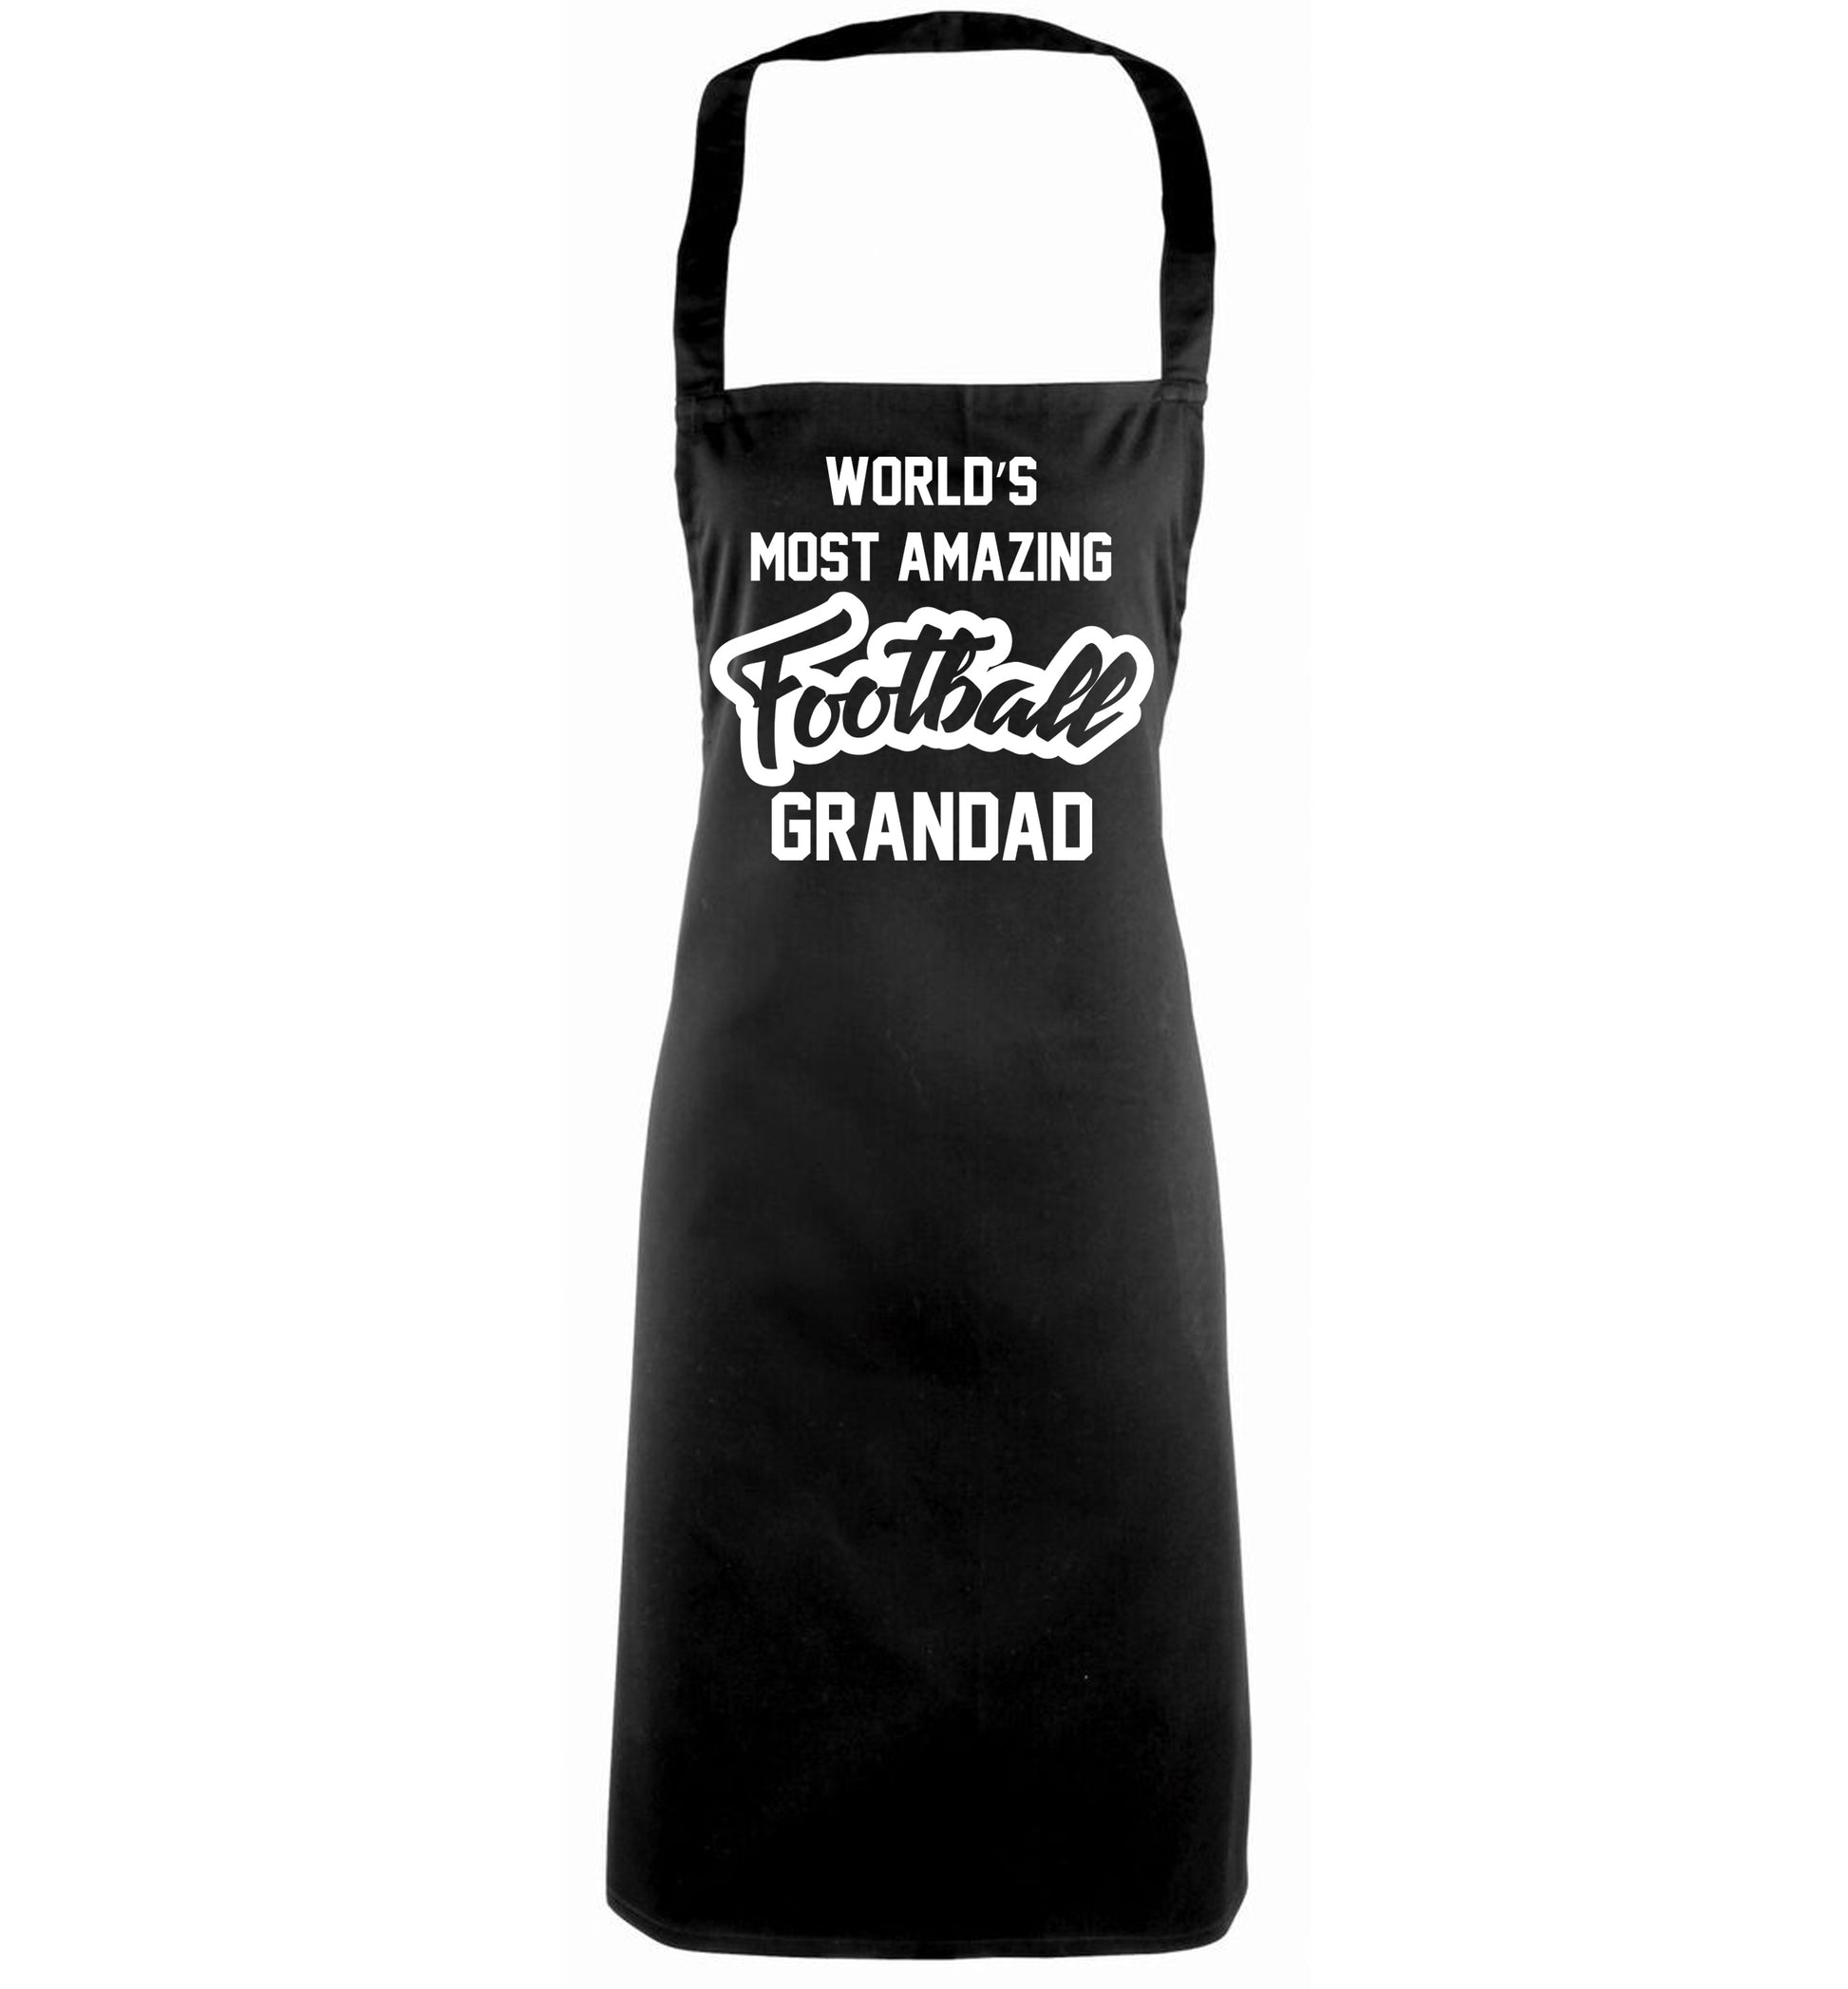 Worlds most amazing football grandad black apron